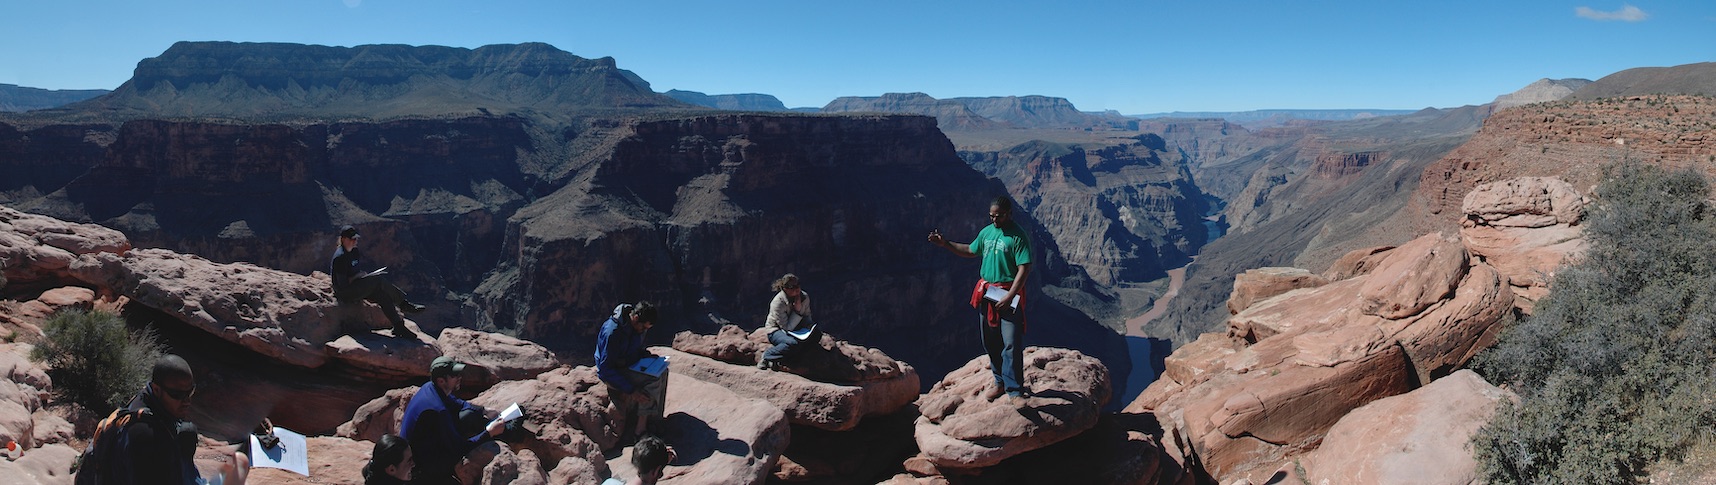 Grand Canyon presentation, 2007